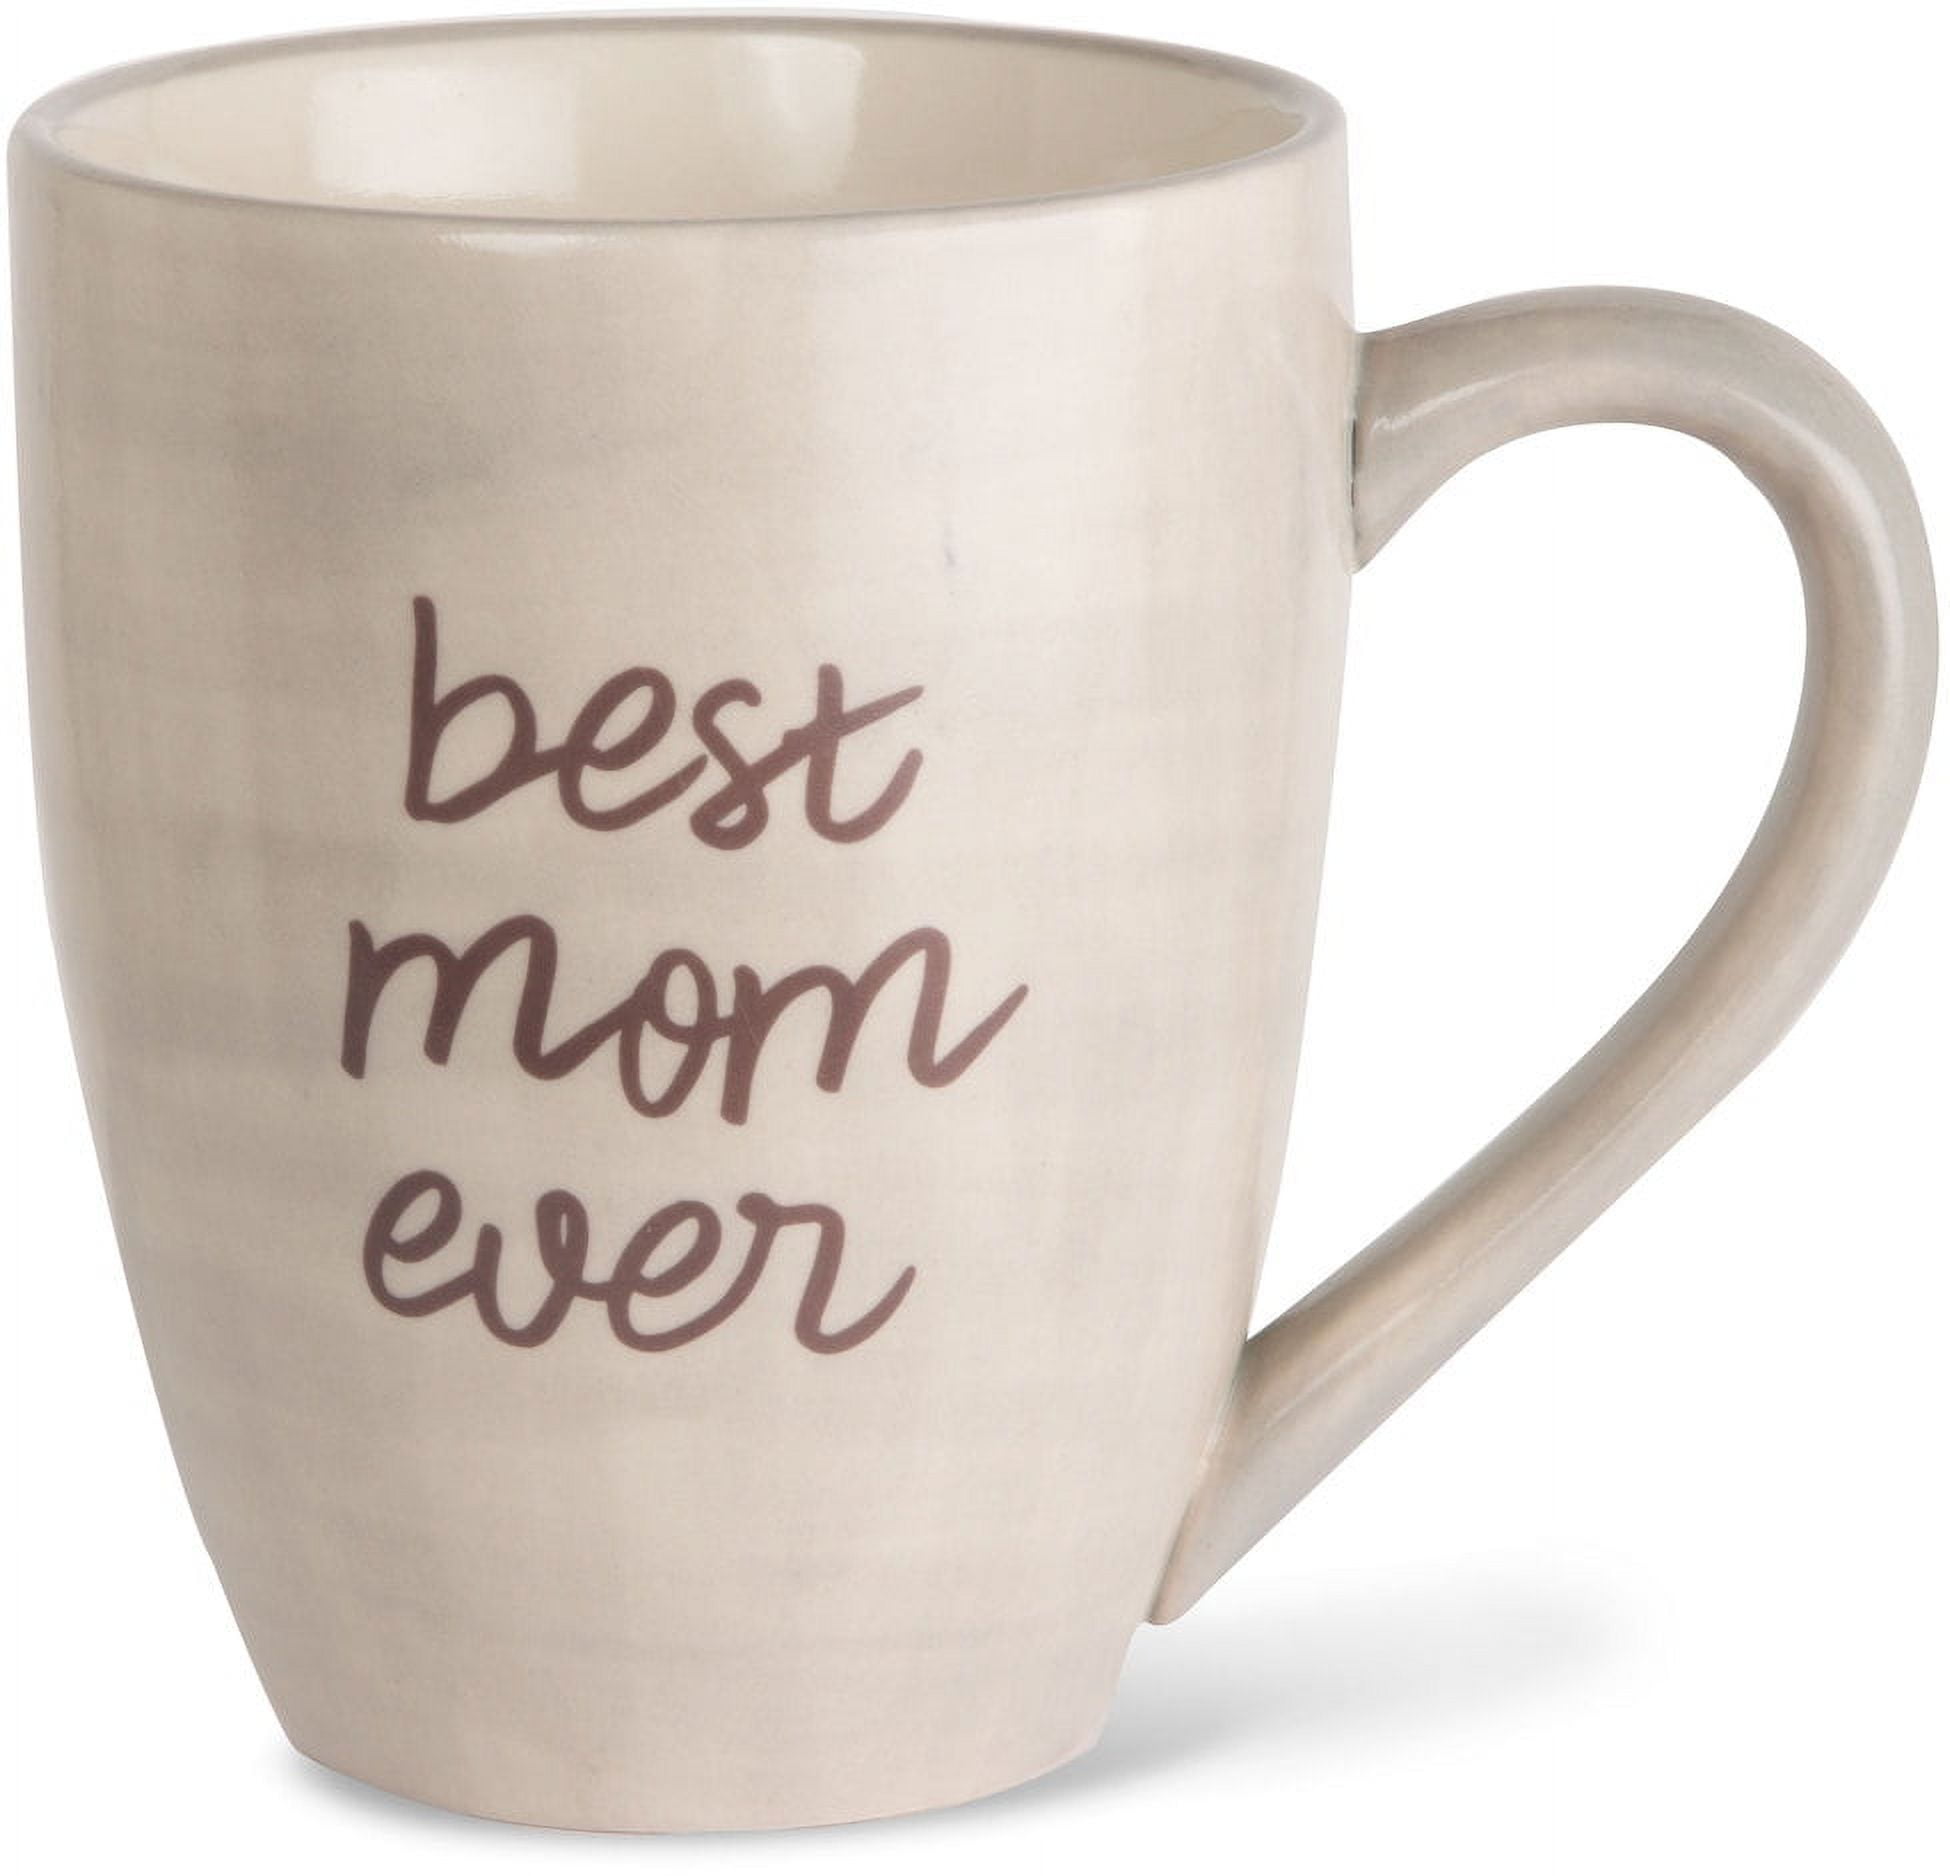 Best Mom, 18 oz Latte Cup - Mom Love - Pavilion